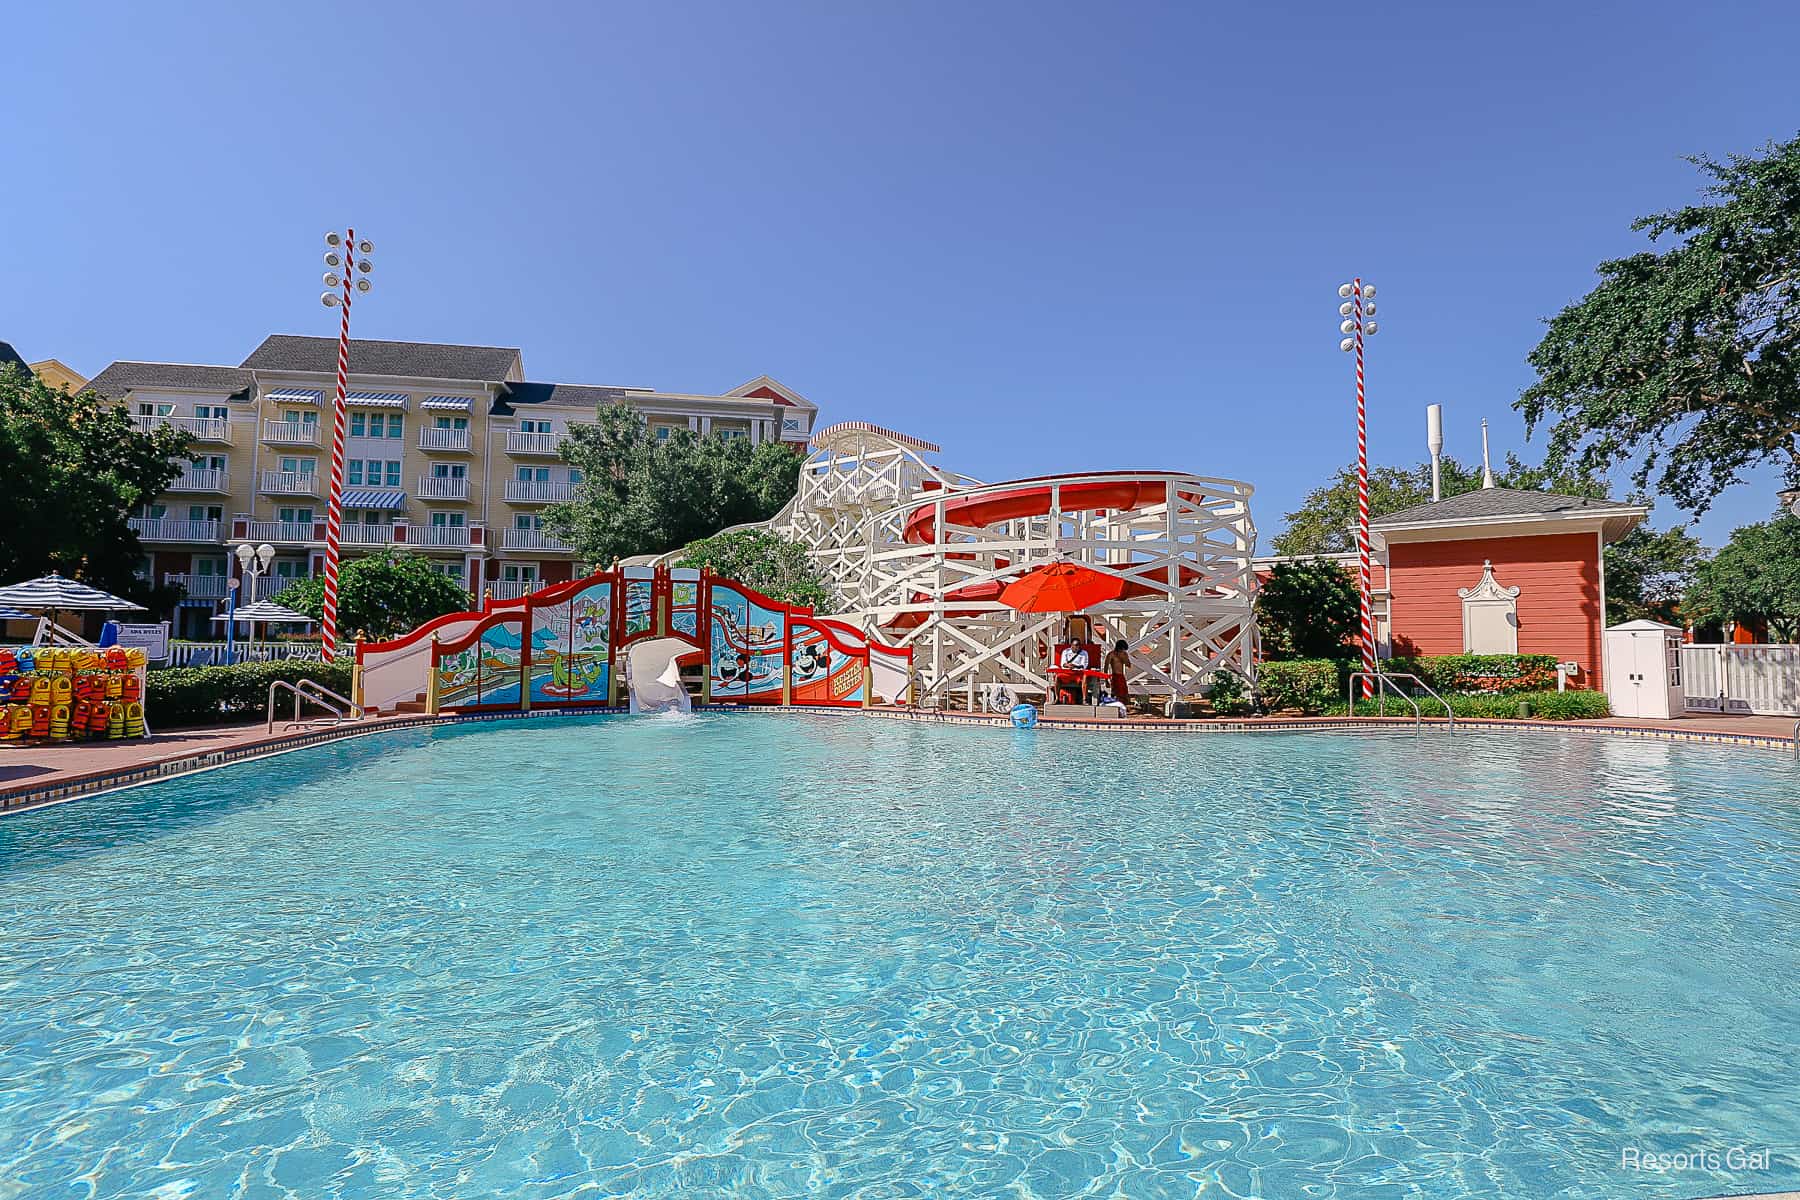 The Resorts Gal Guide to Disney’s Boardwalk Inn’s Pools